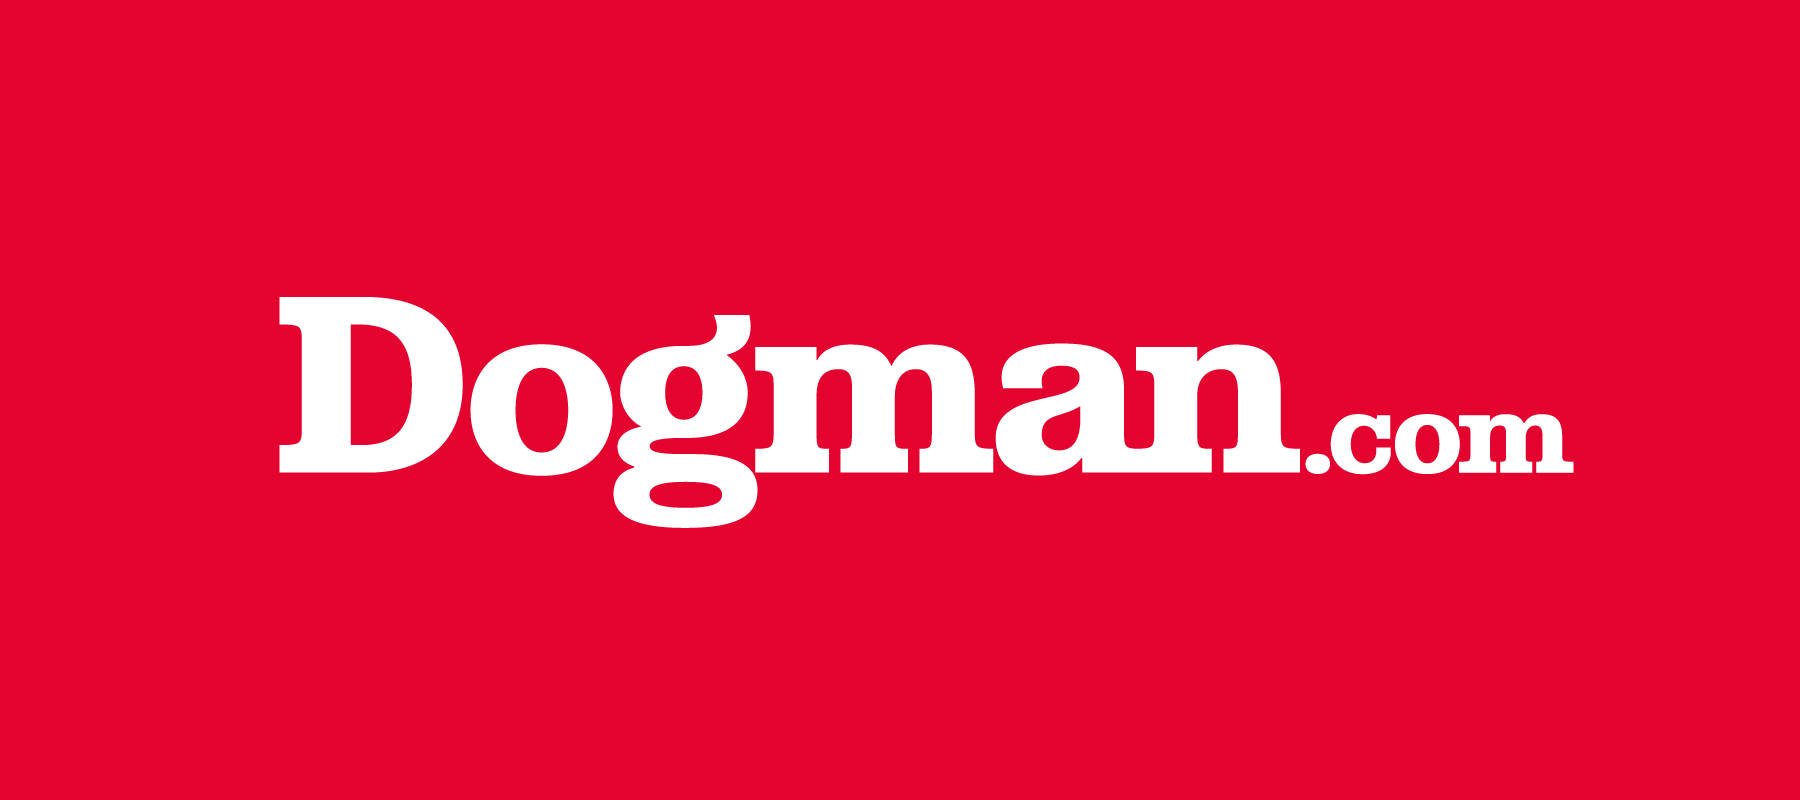 Dogman.com-Logo-White on red